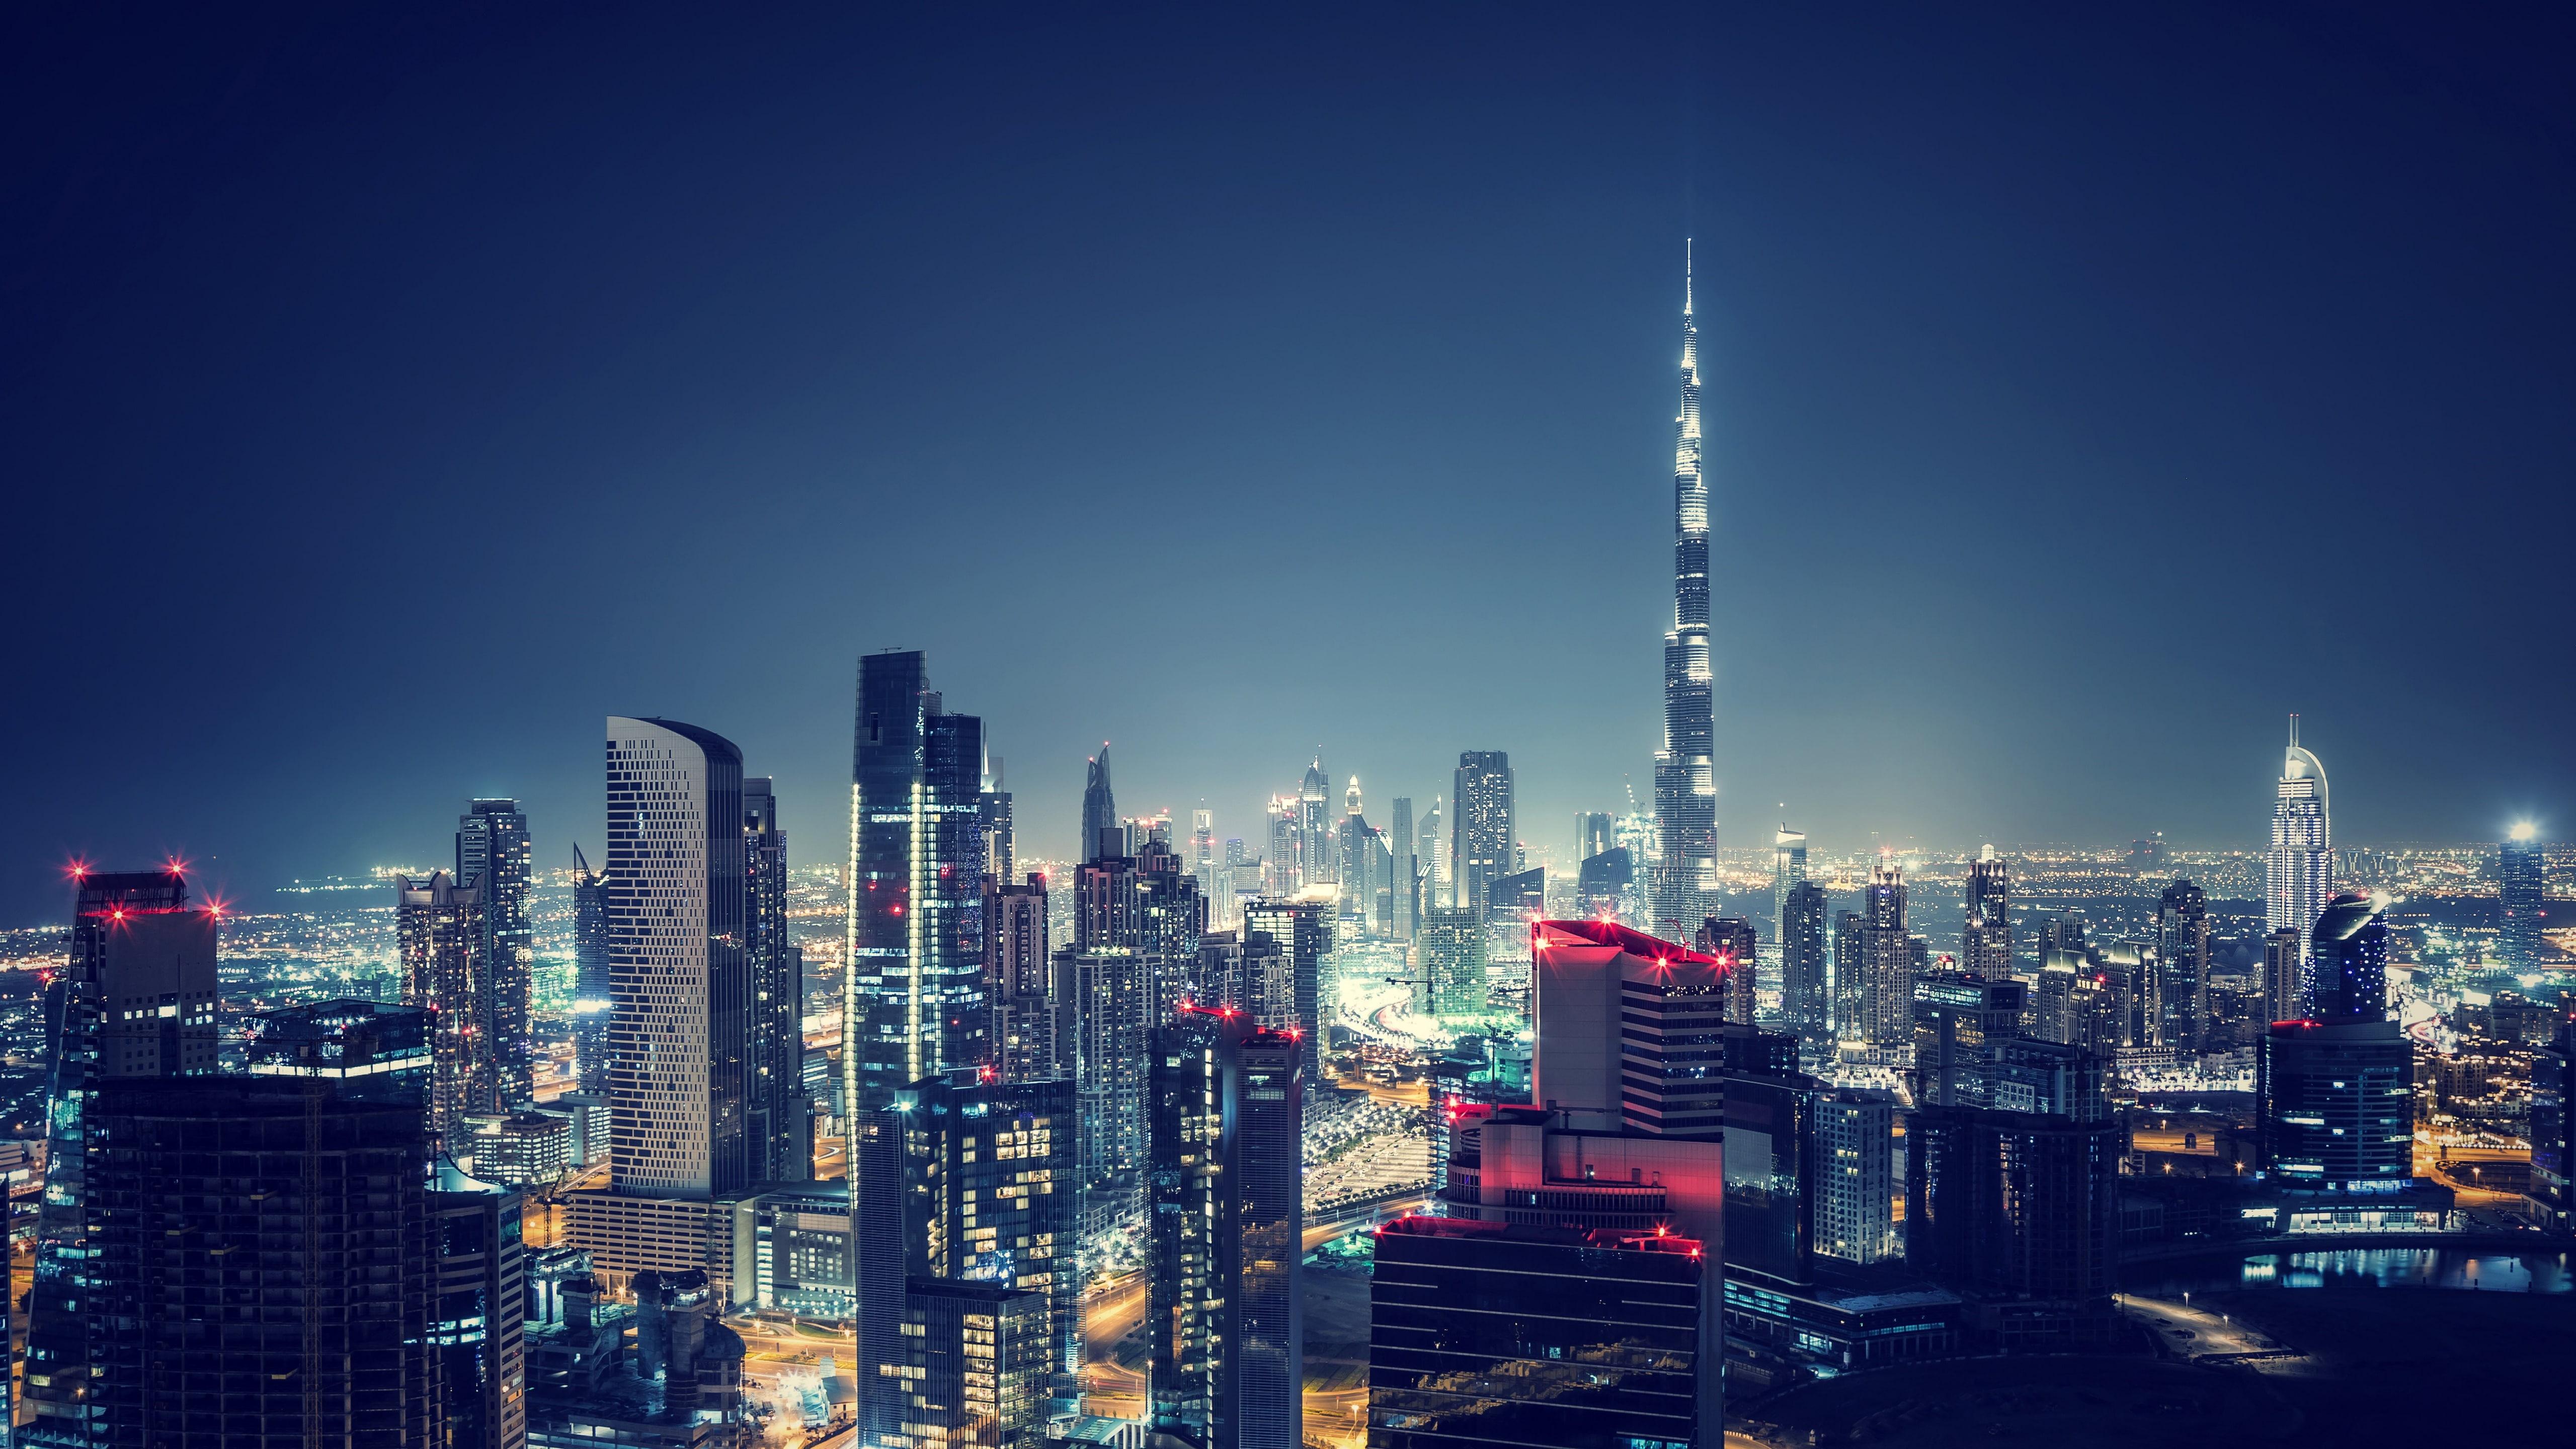 Night Wallpaper, 5k, City Lights, Uae, Nited Arab Emirates, Dubai, Downtown  - Wallpaperforu